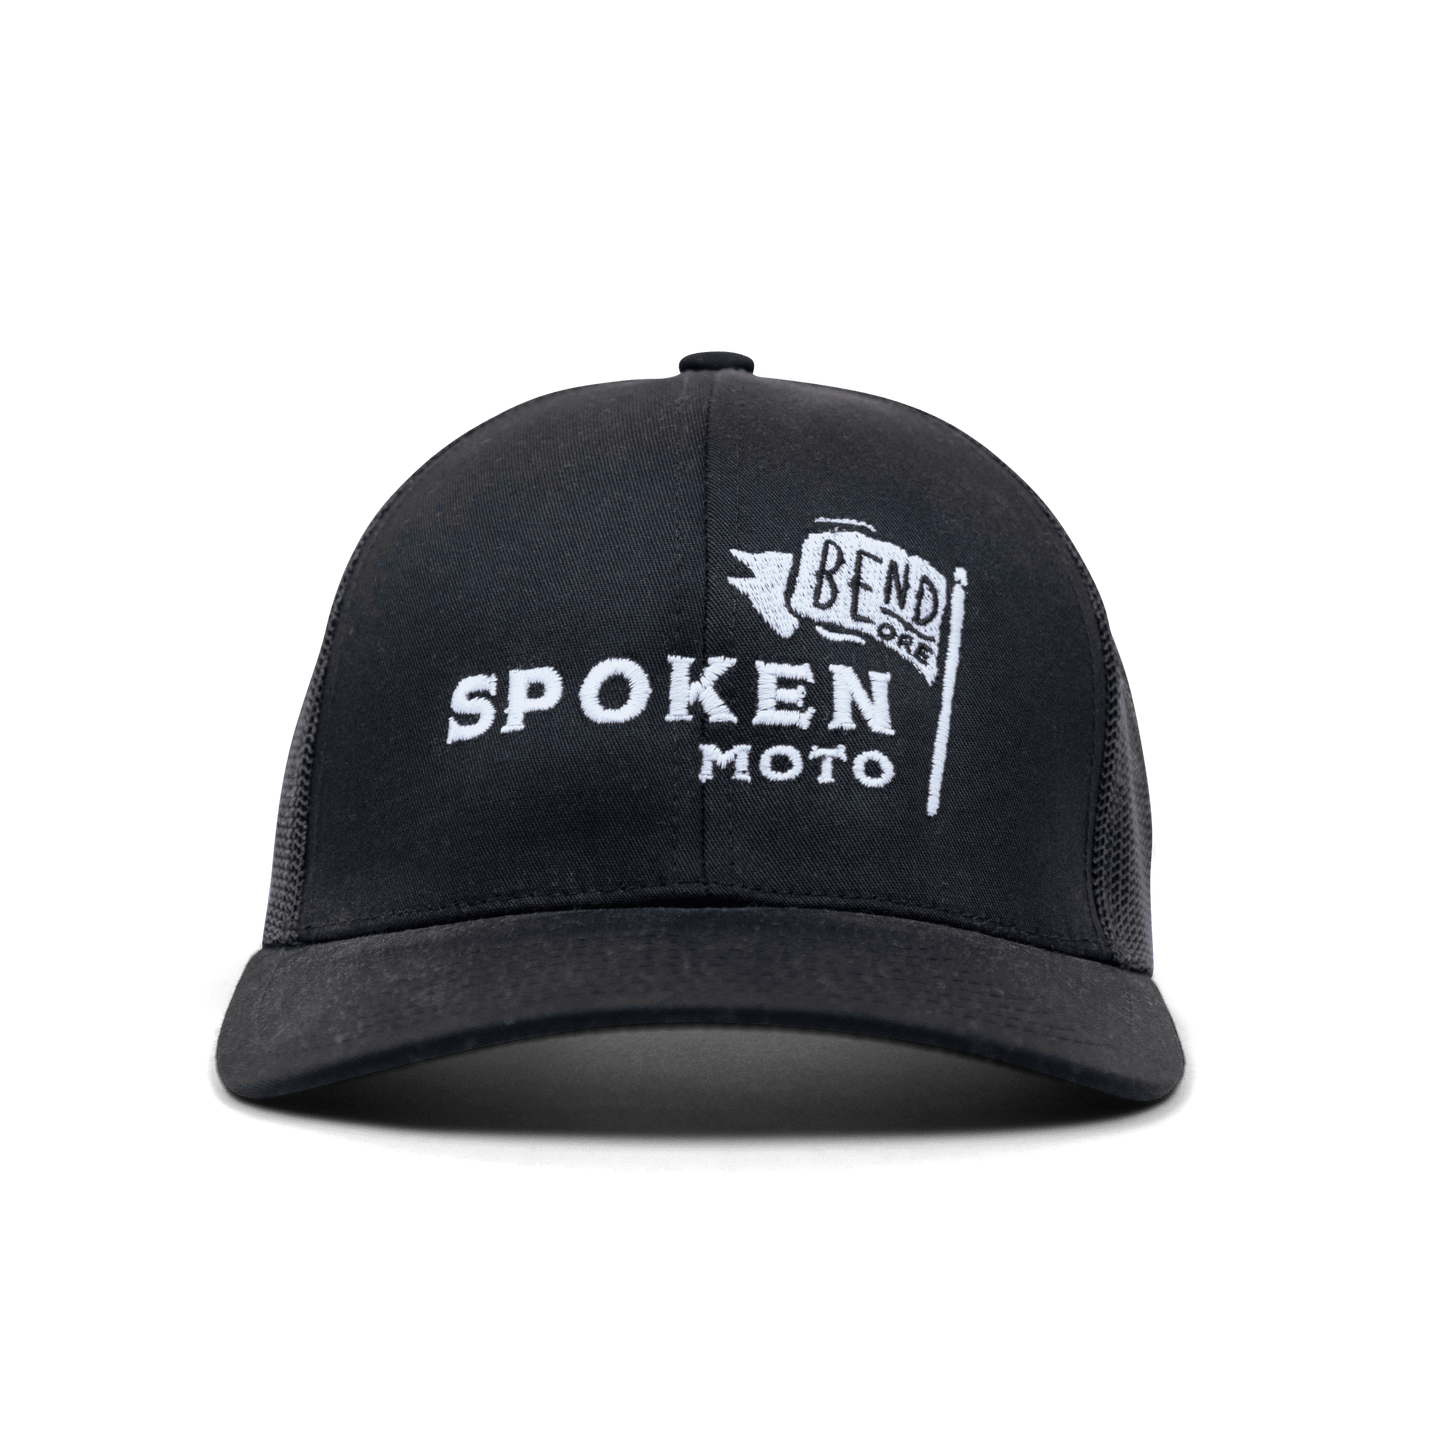 The Spoken Moto Flag Trucker hat from the front.